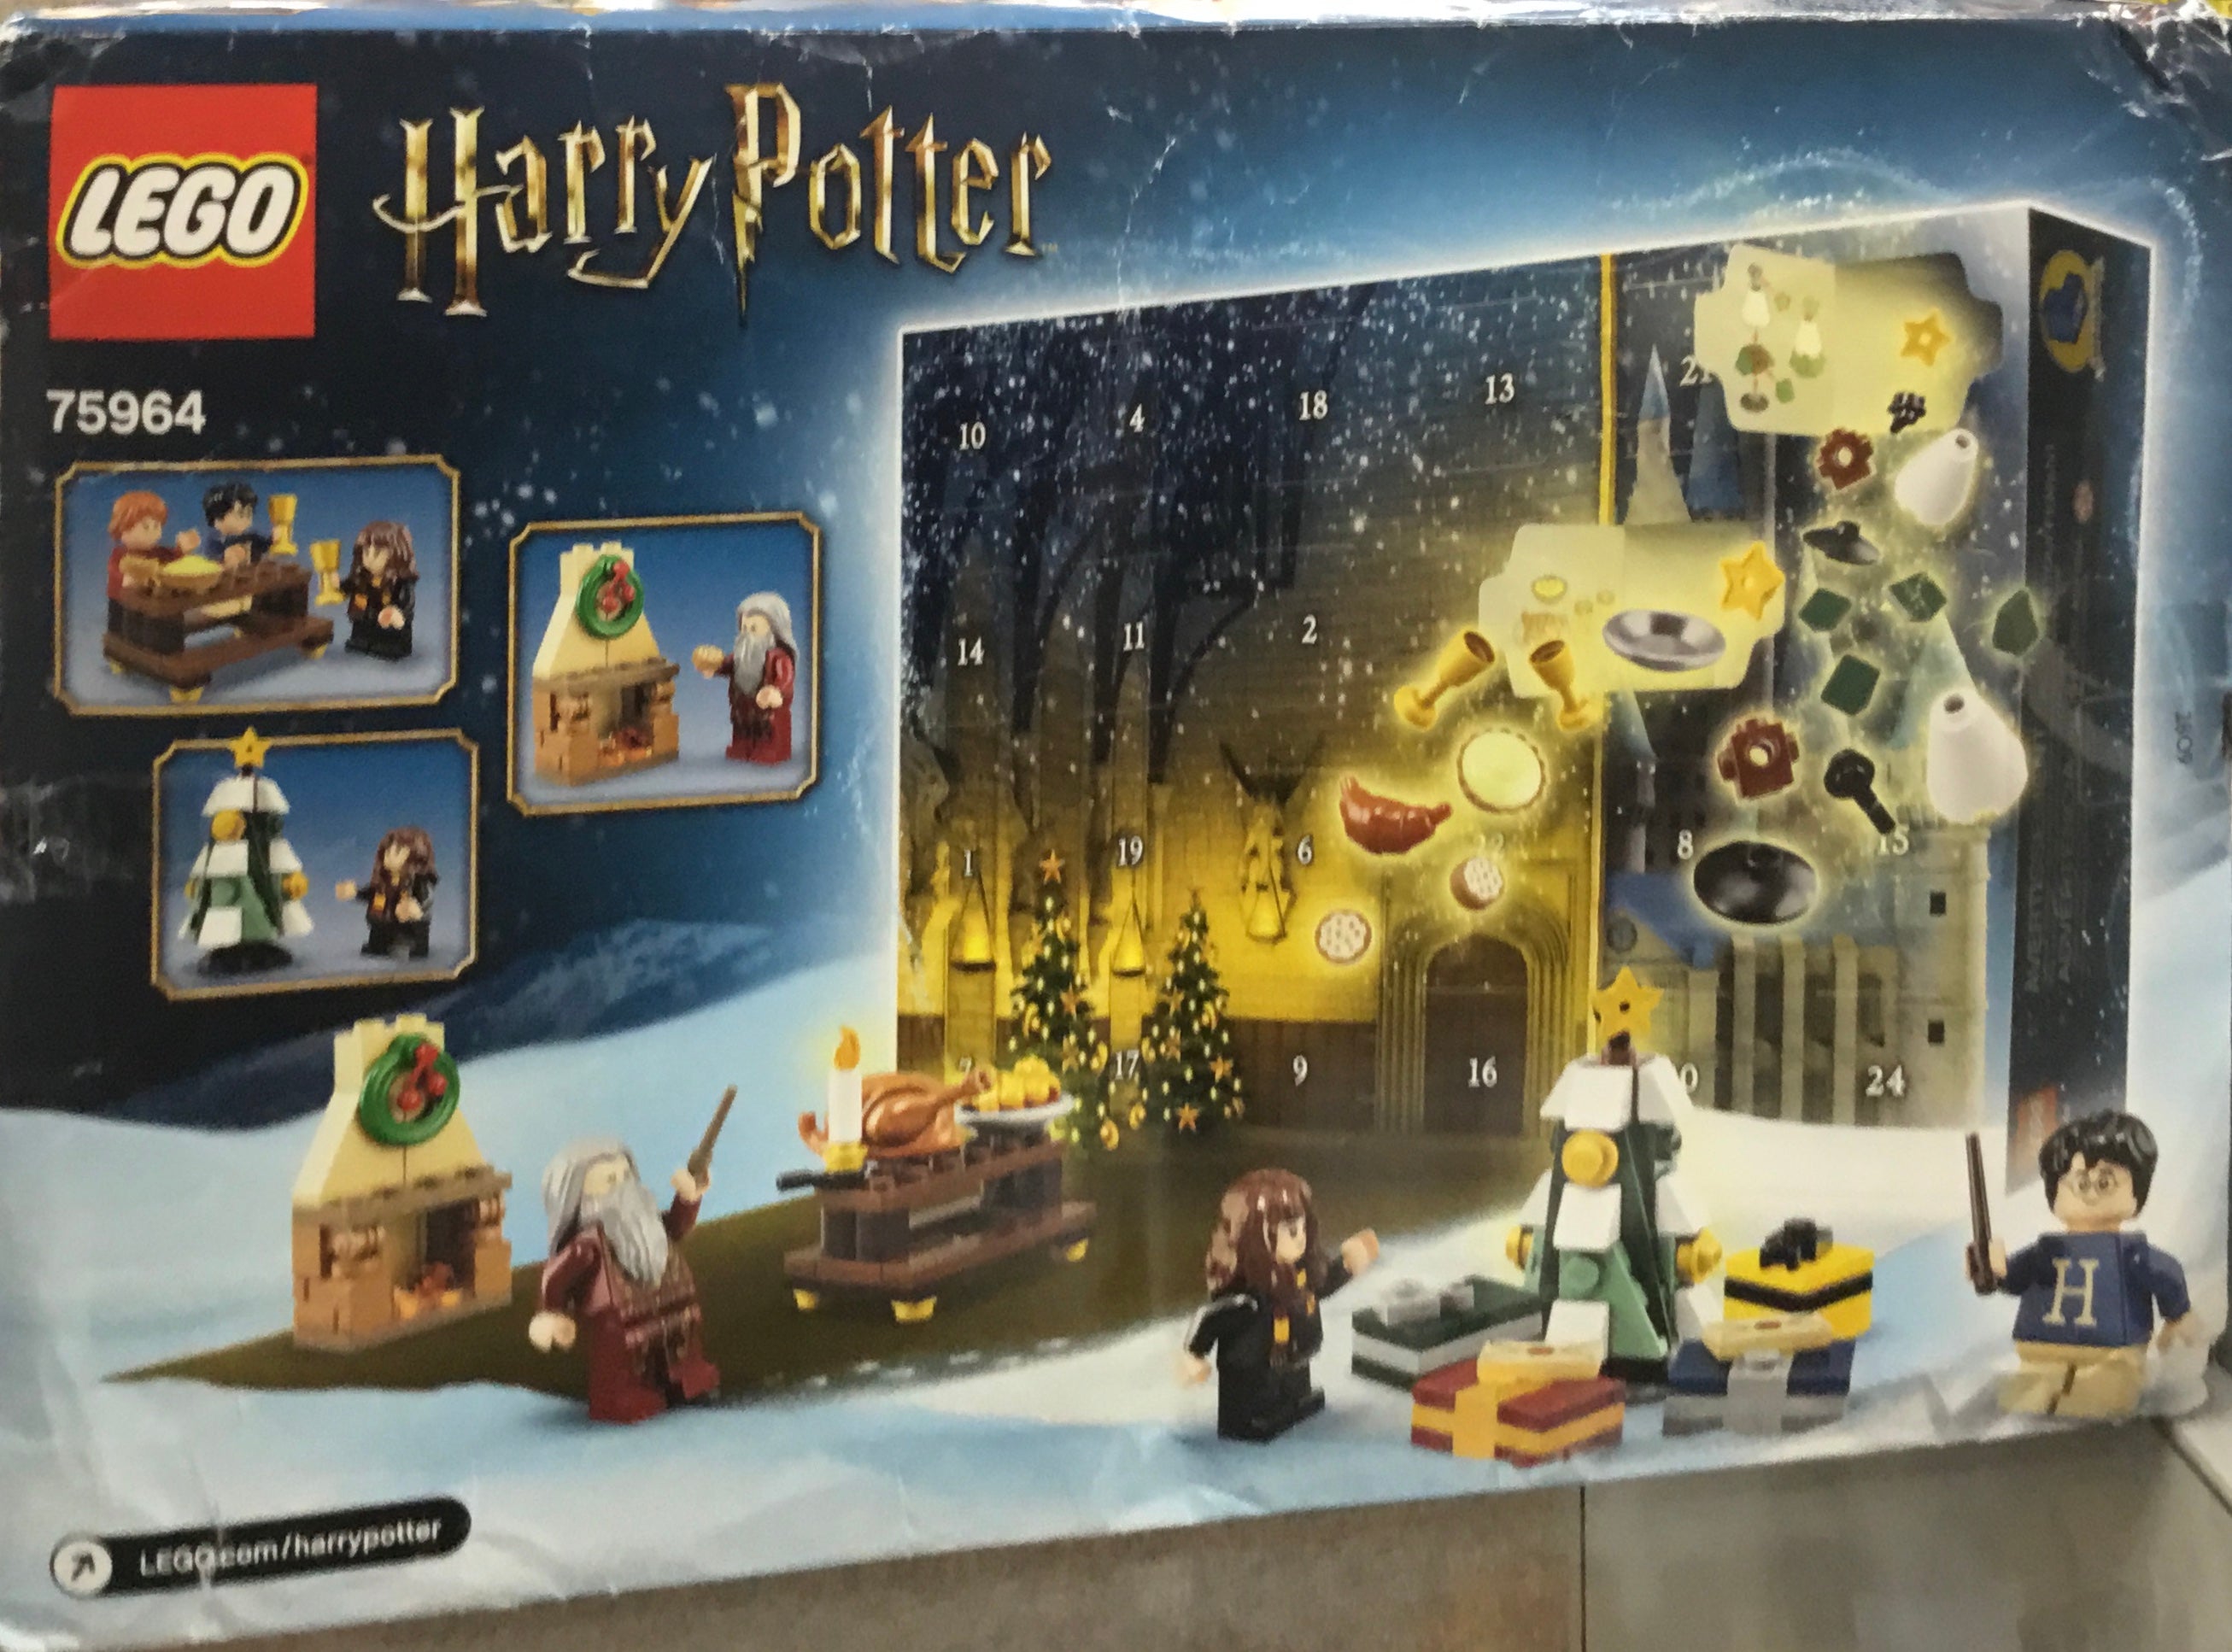 Advent Calendar 2019, Harry Potter, 75964